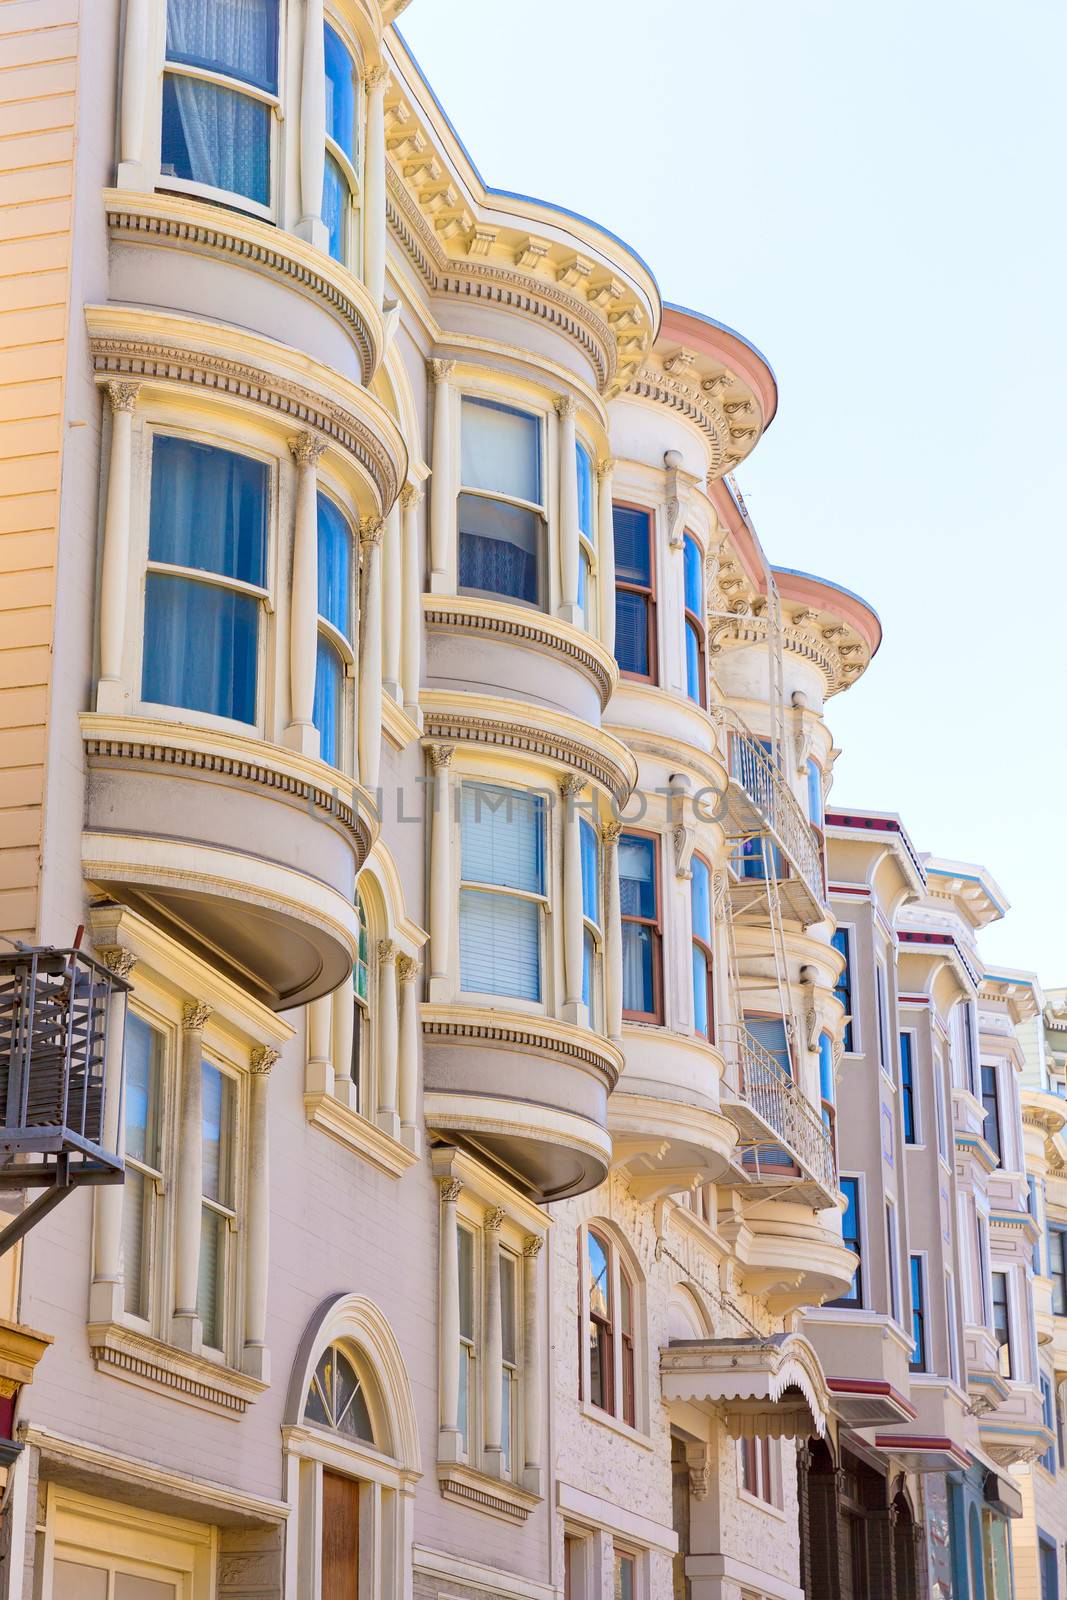 San Francisco Victorian houses near Washington Square California USA